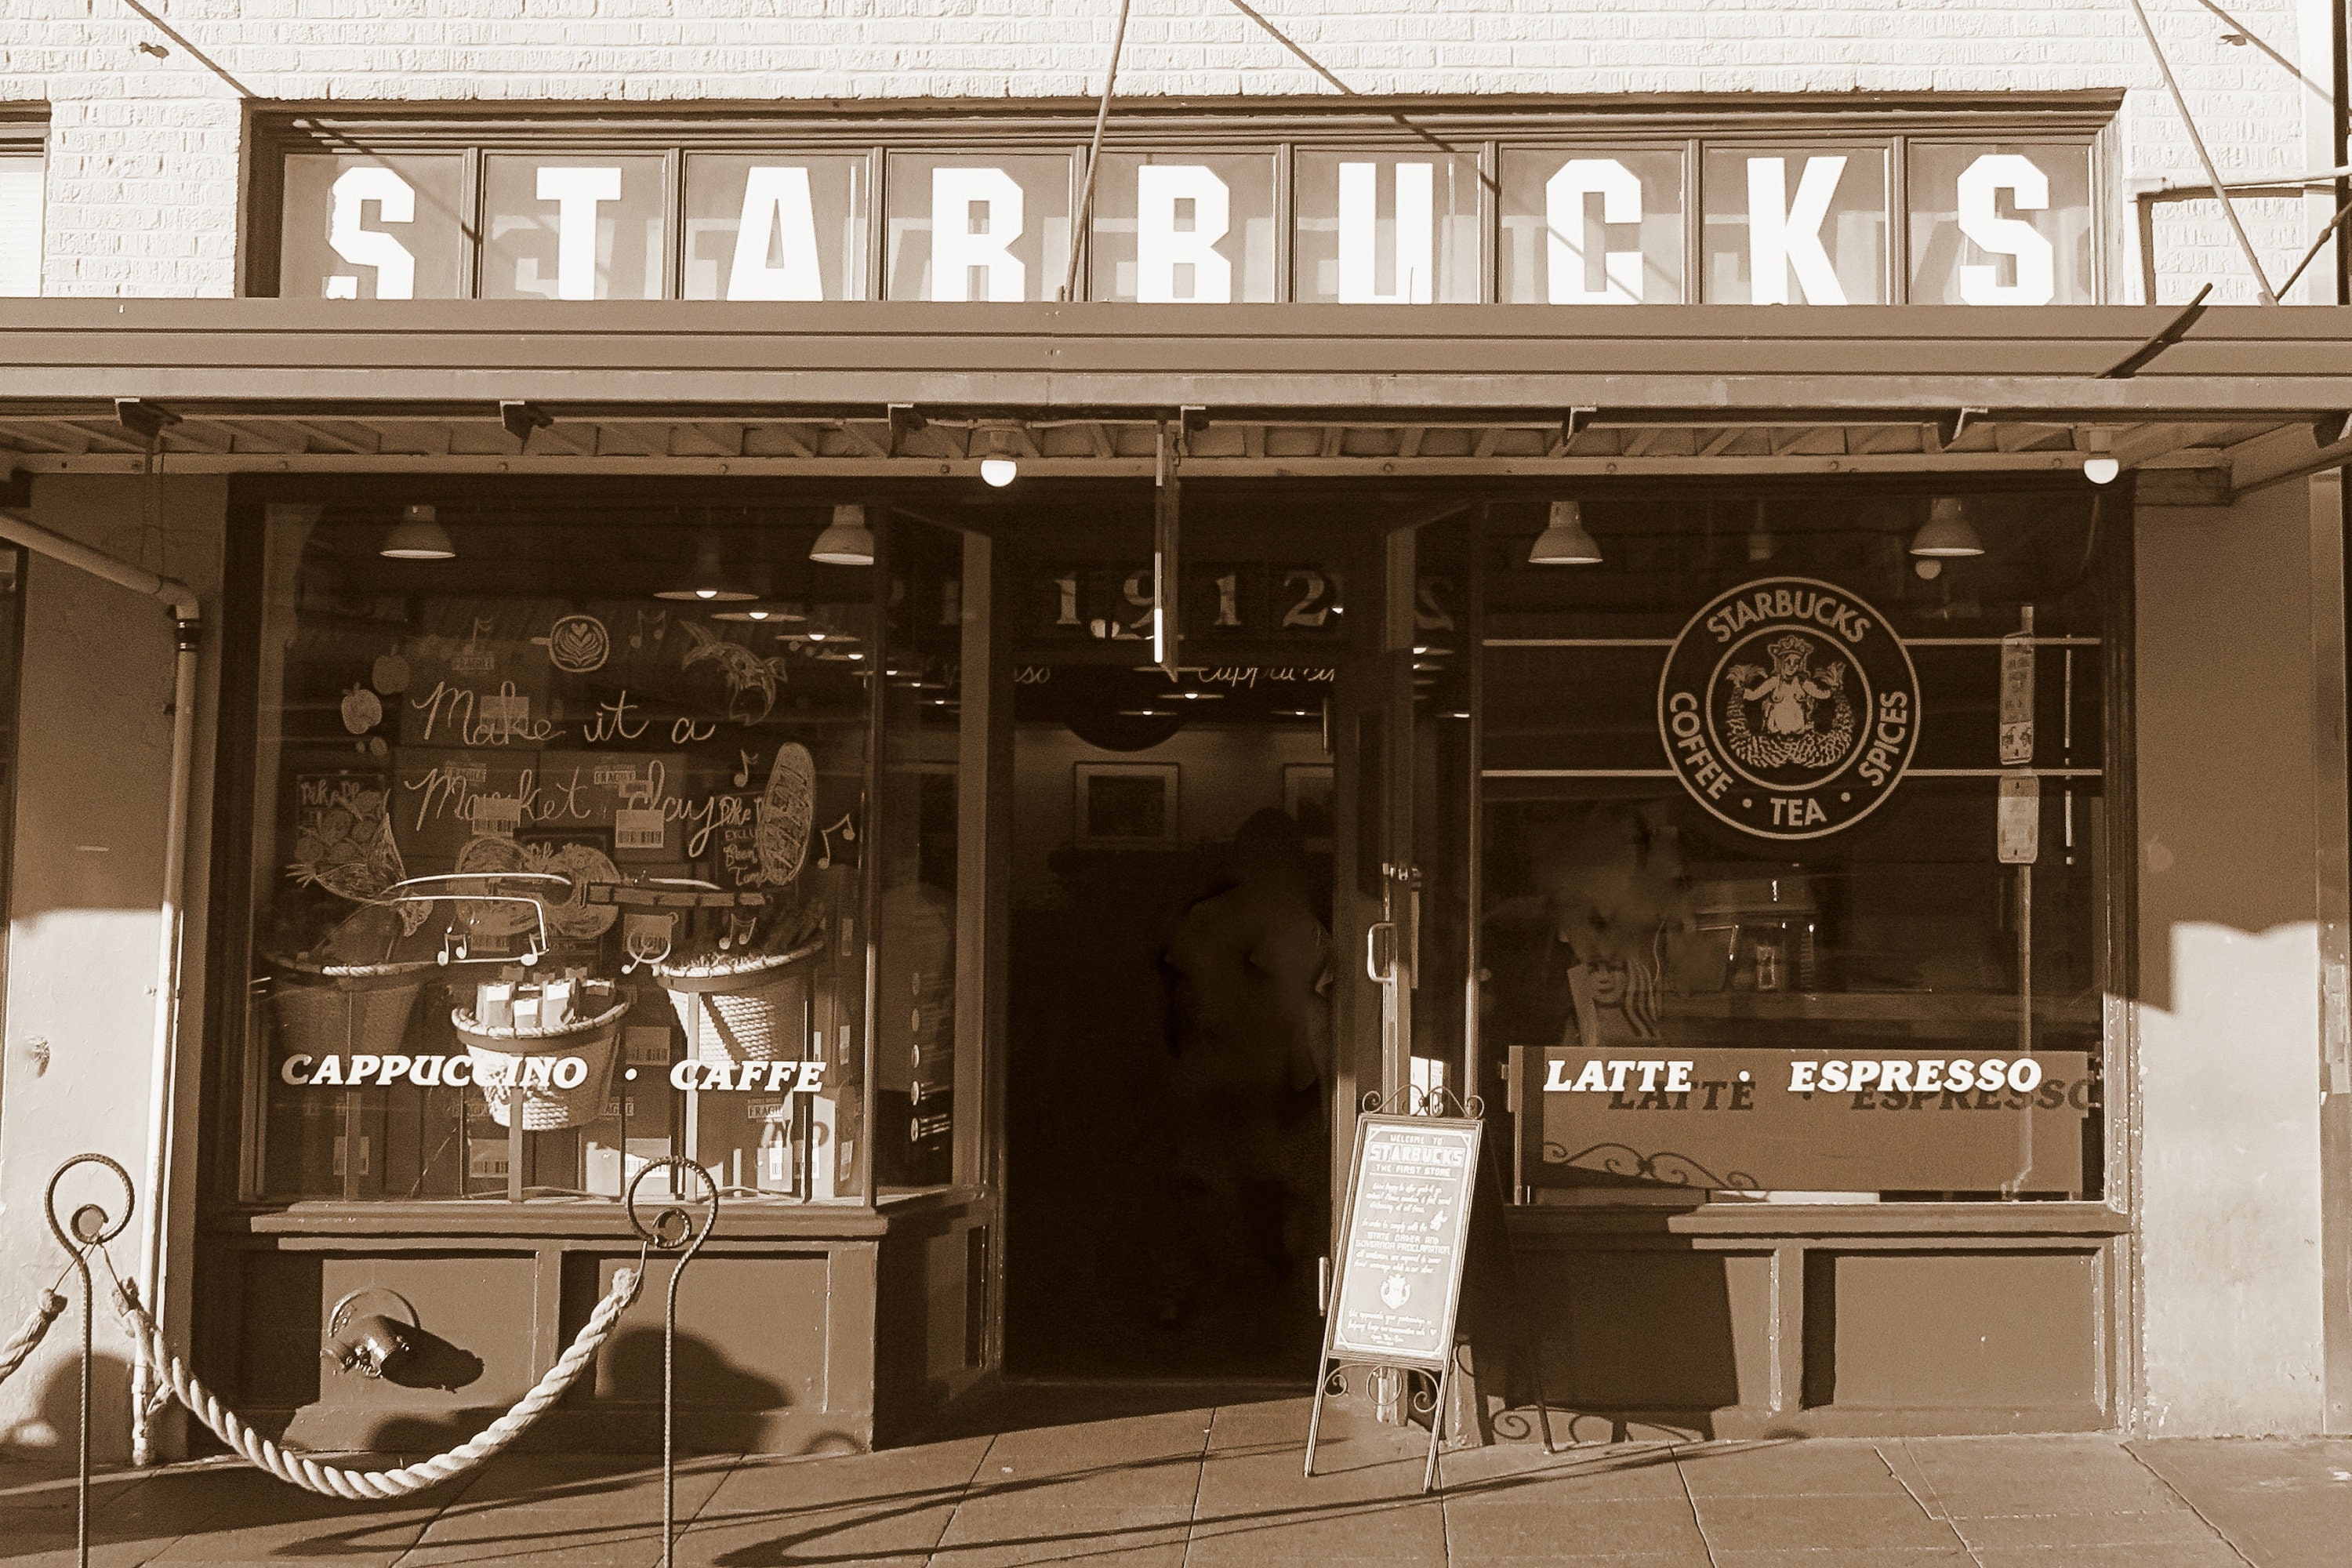 The Original Starbucks Seattle Pike Place Starbucks Photo Print